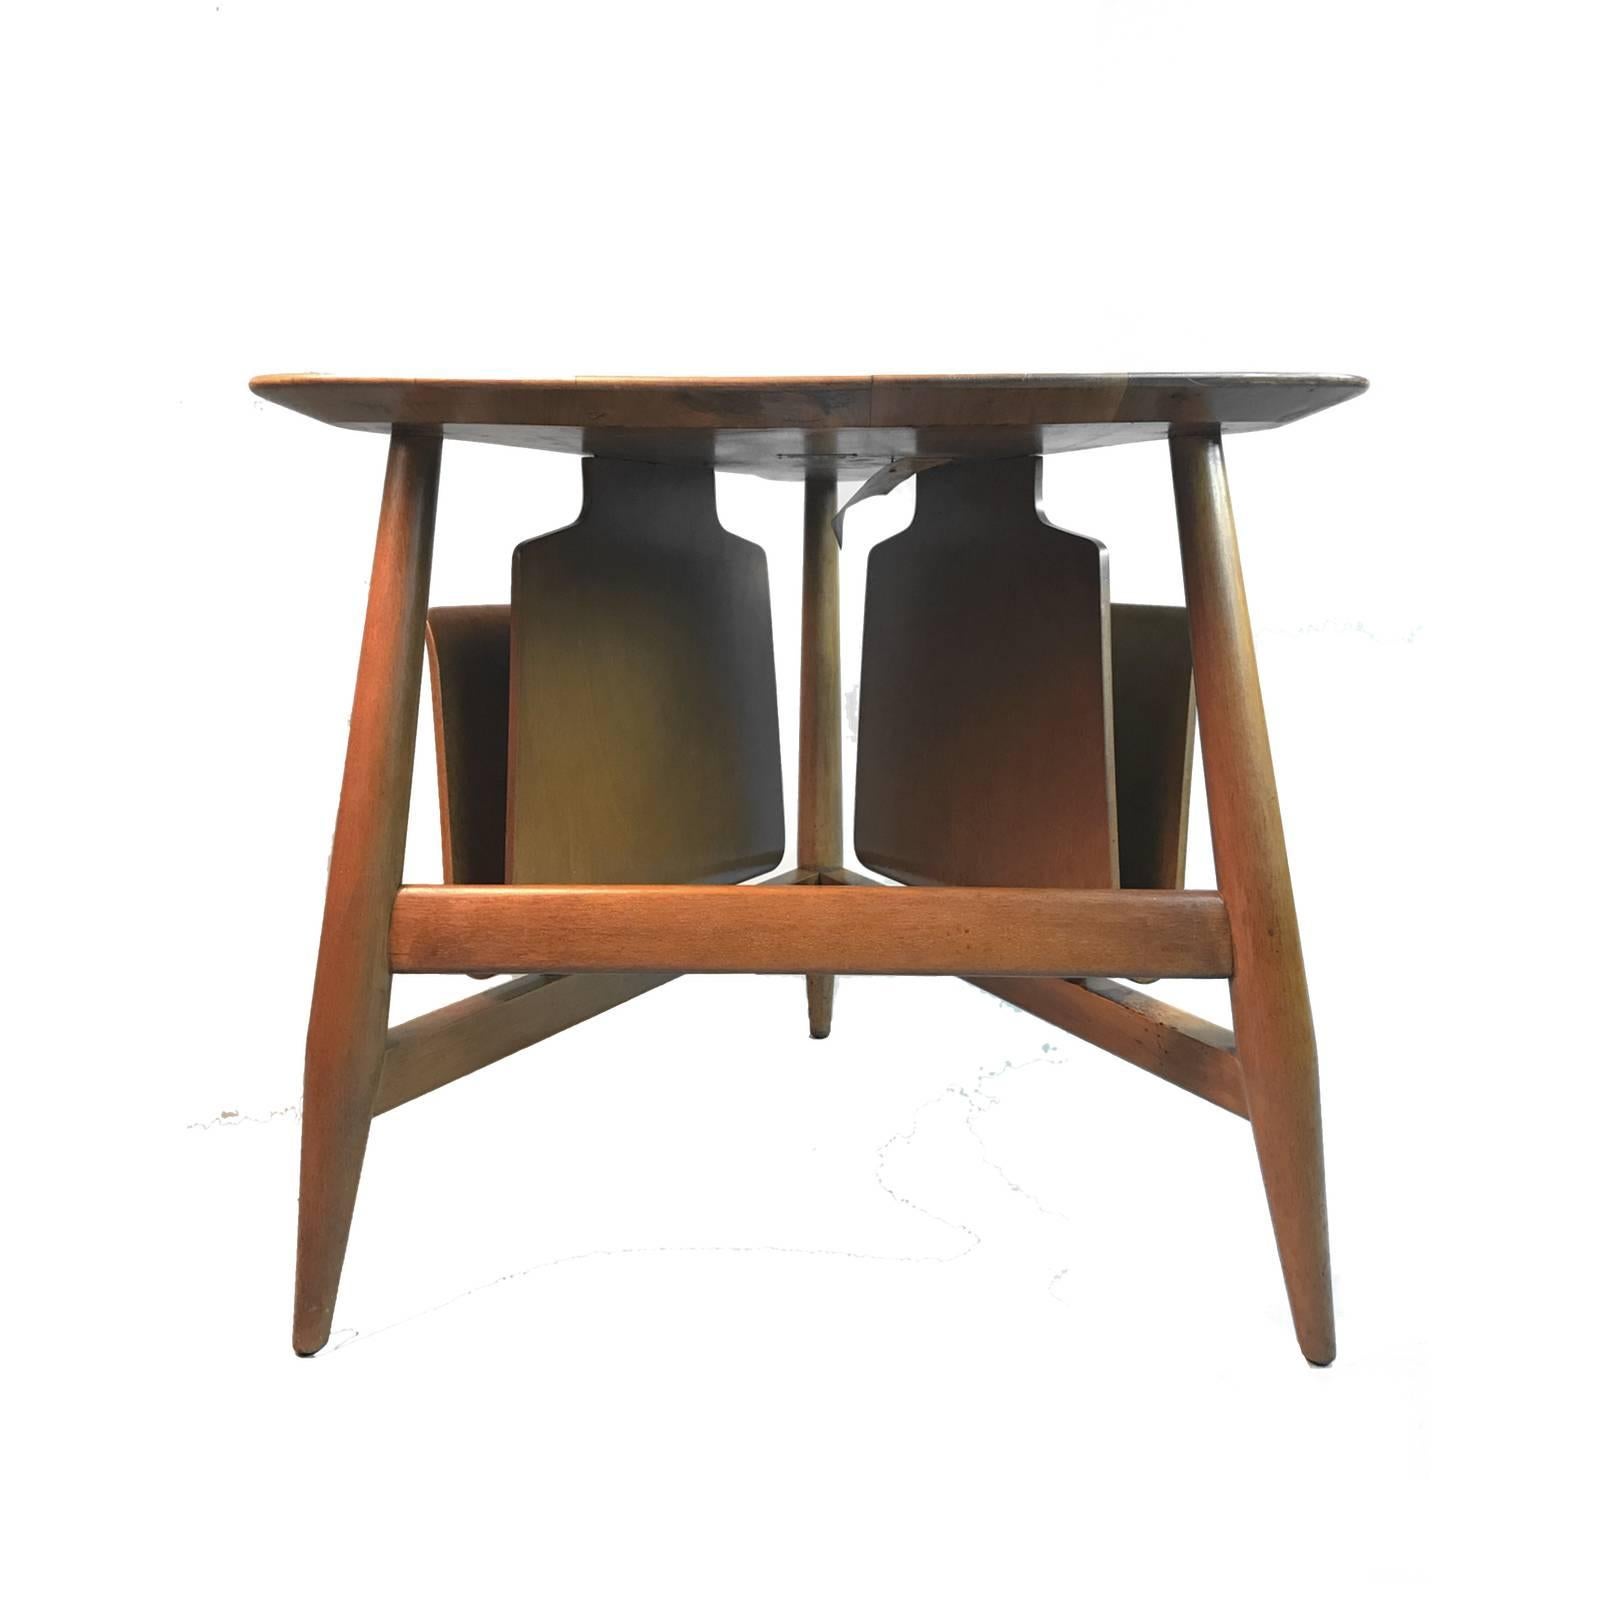 Stunning original condition Dunbar table. Model number #5313. Maintains original labels.